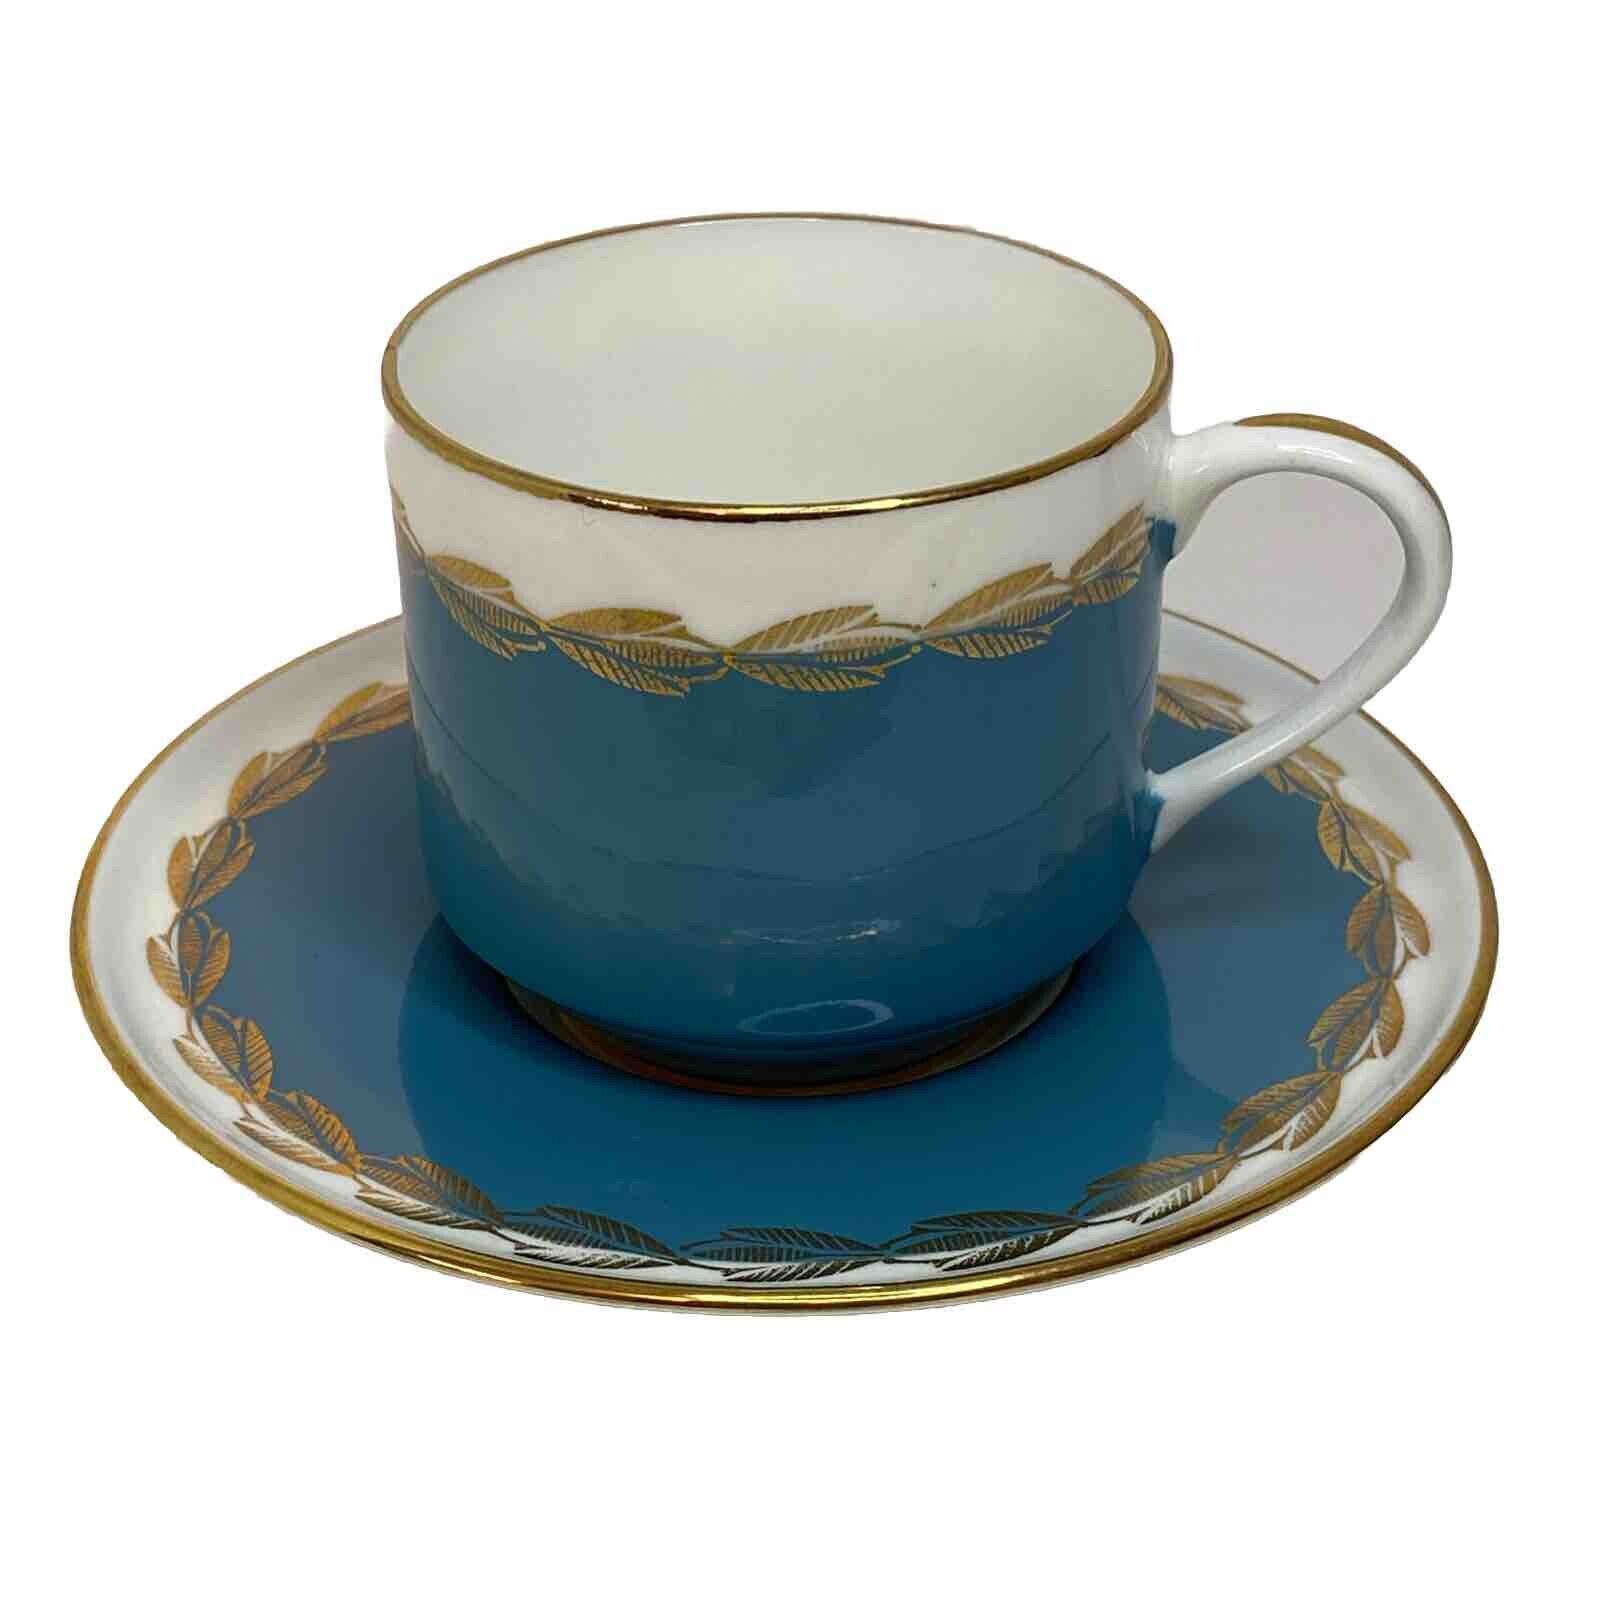 Vintage Aynsley Tea Cup And Saucer Dark Teal Gold Leaf Border Art Deco Style